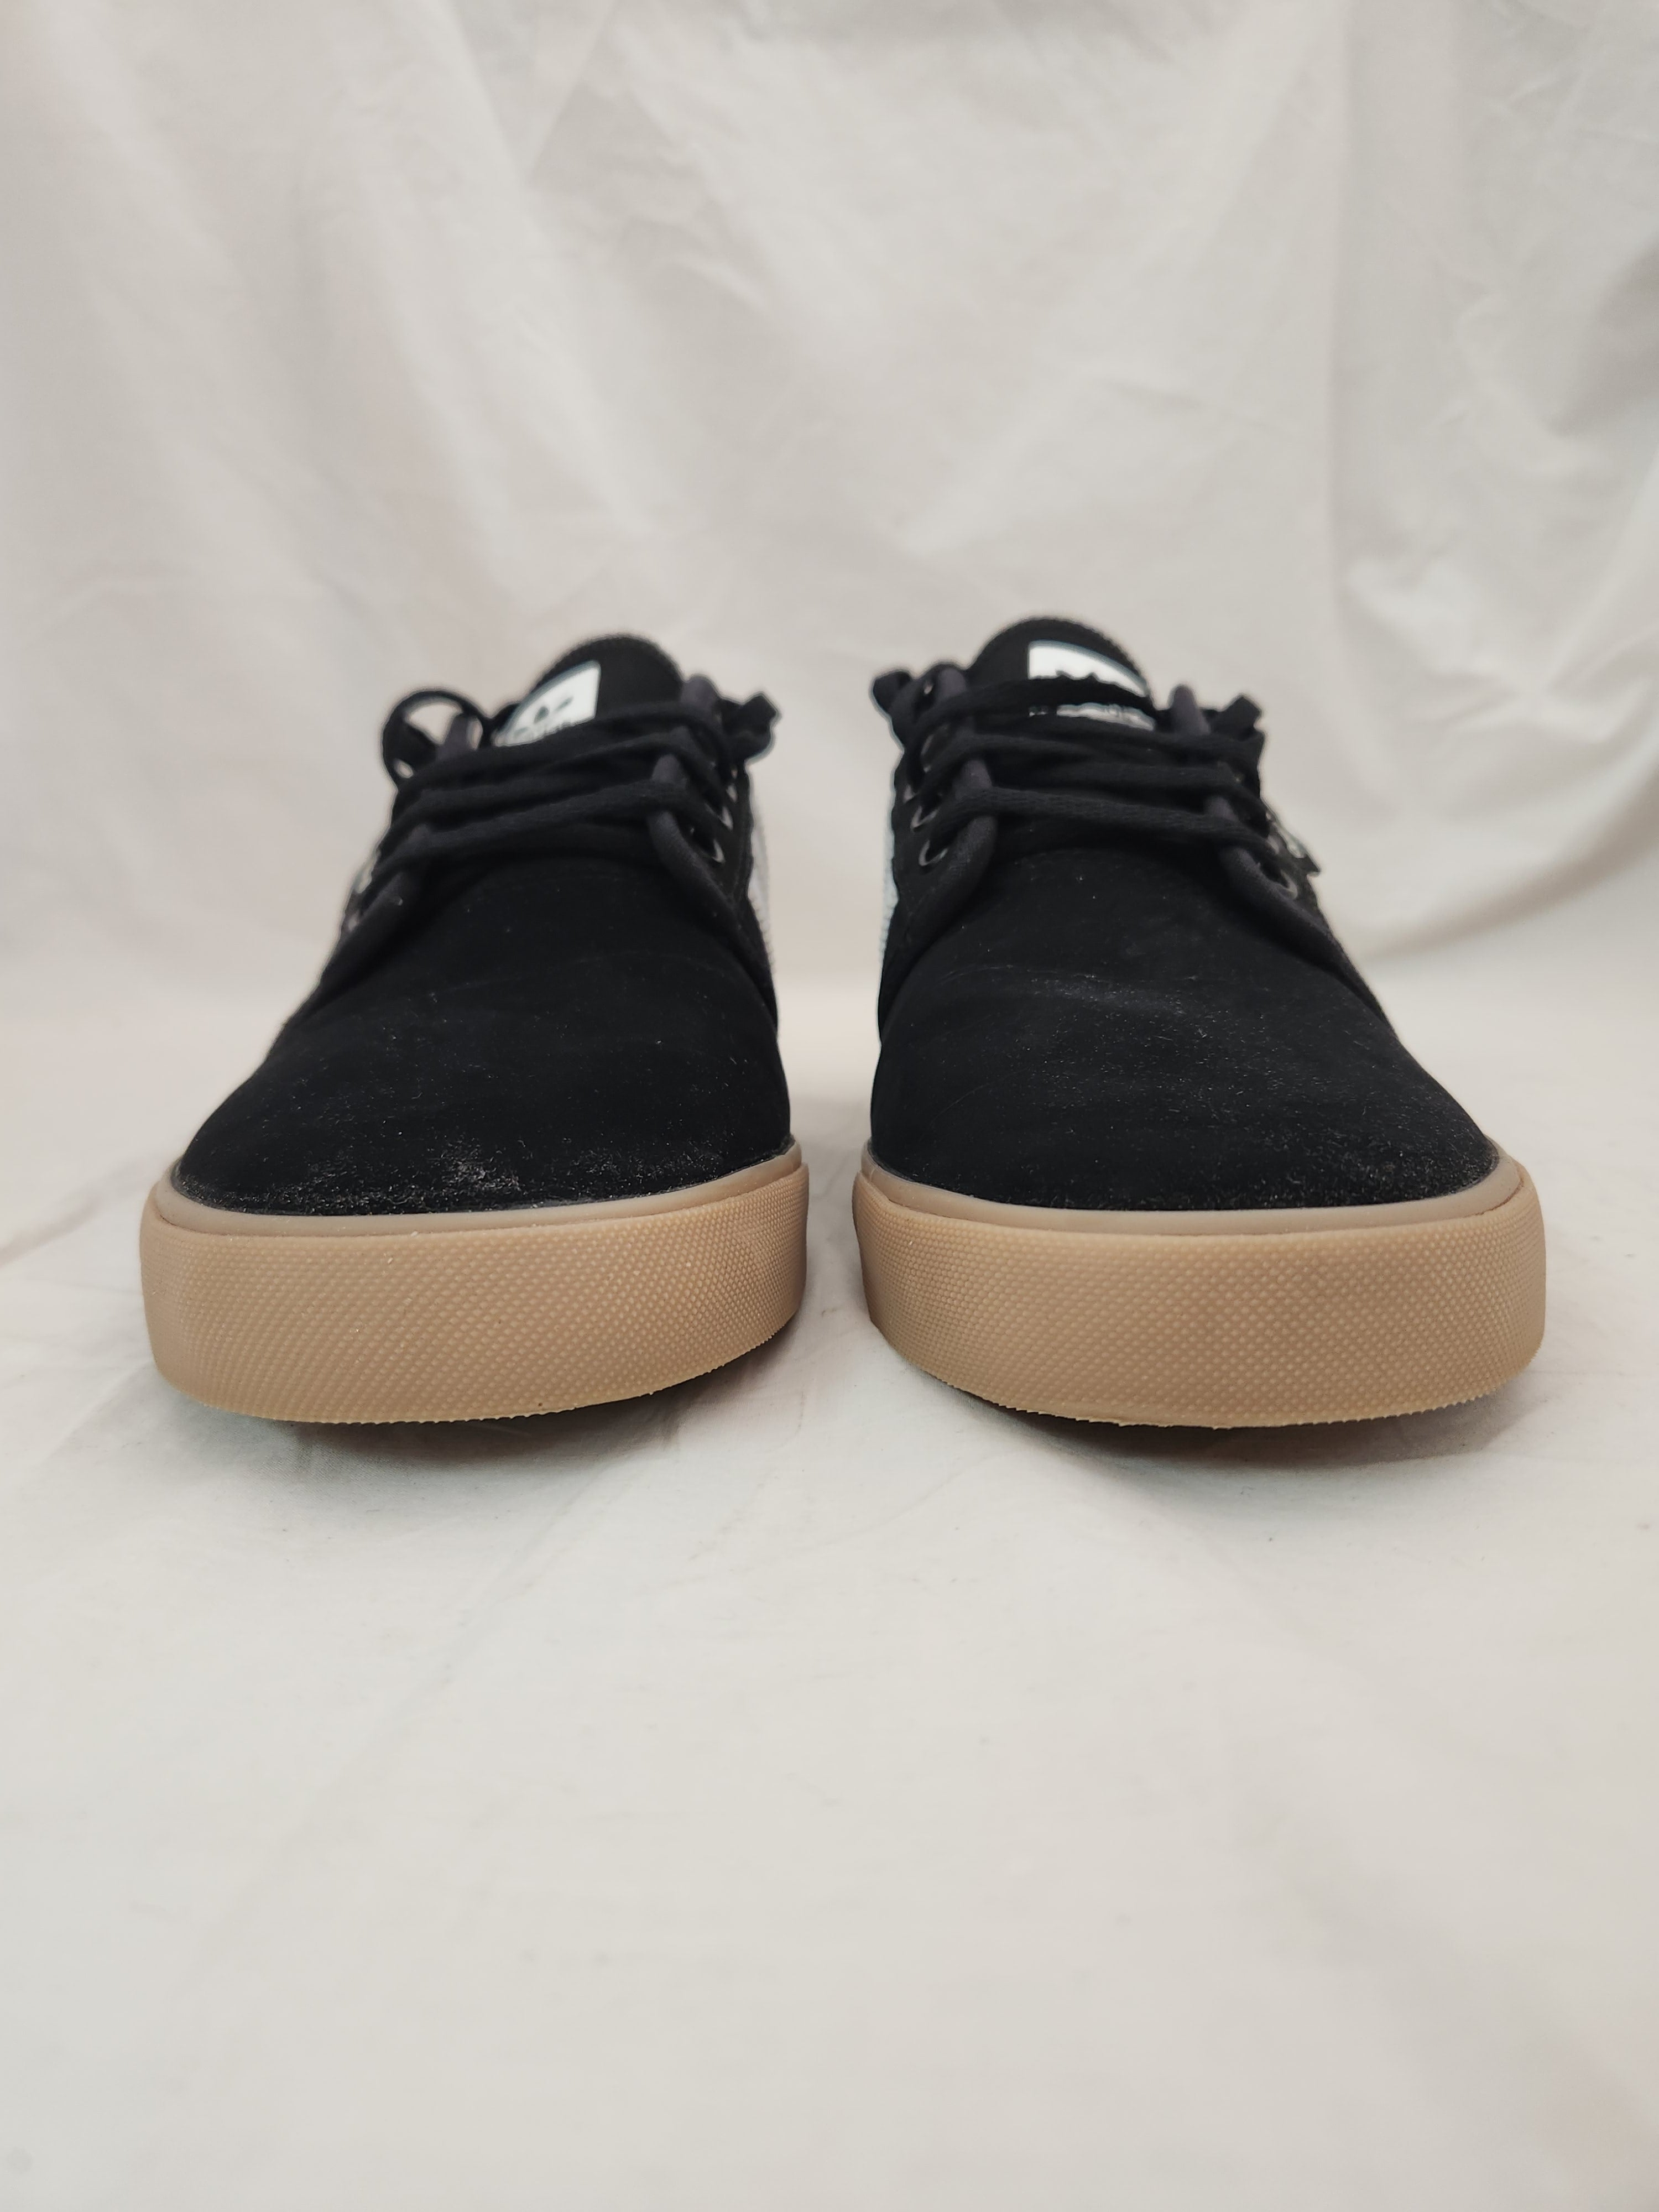 Adidas Swift Run 22 J All Black Sneakers Shoes Mens 7 Womens 9 NWT | eBay